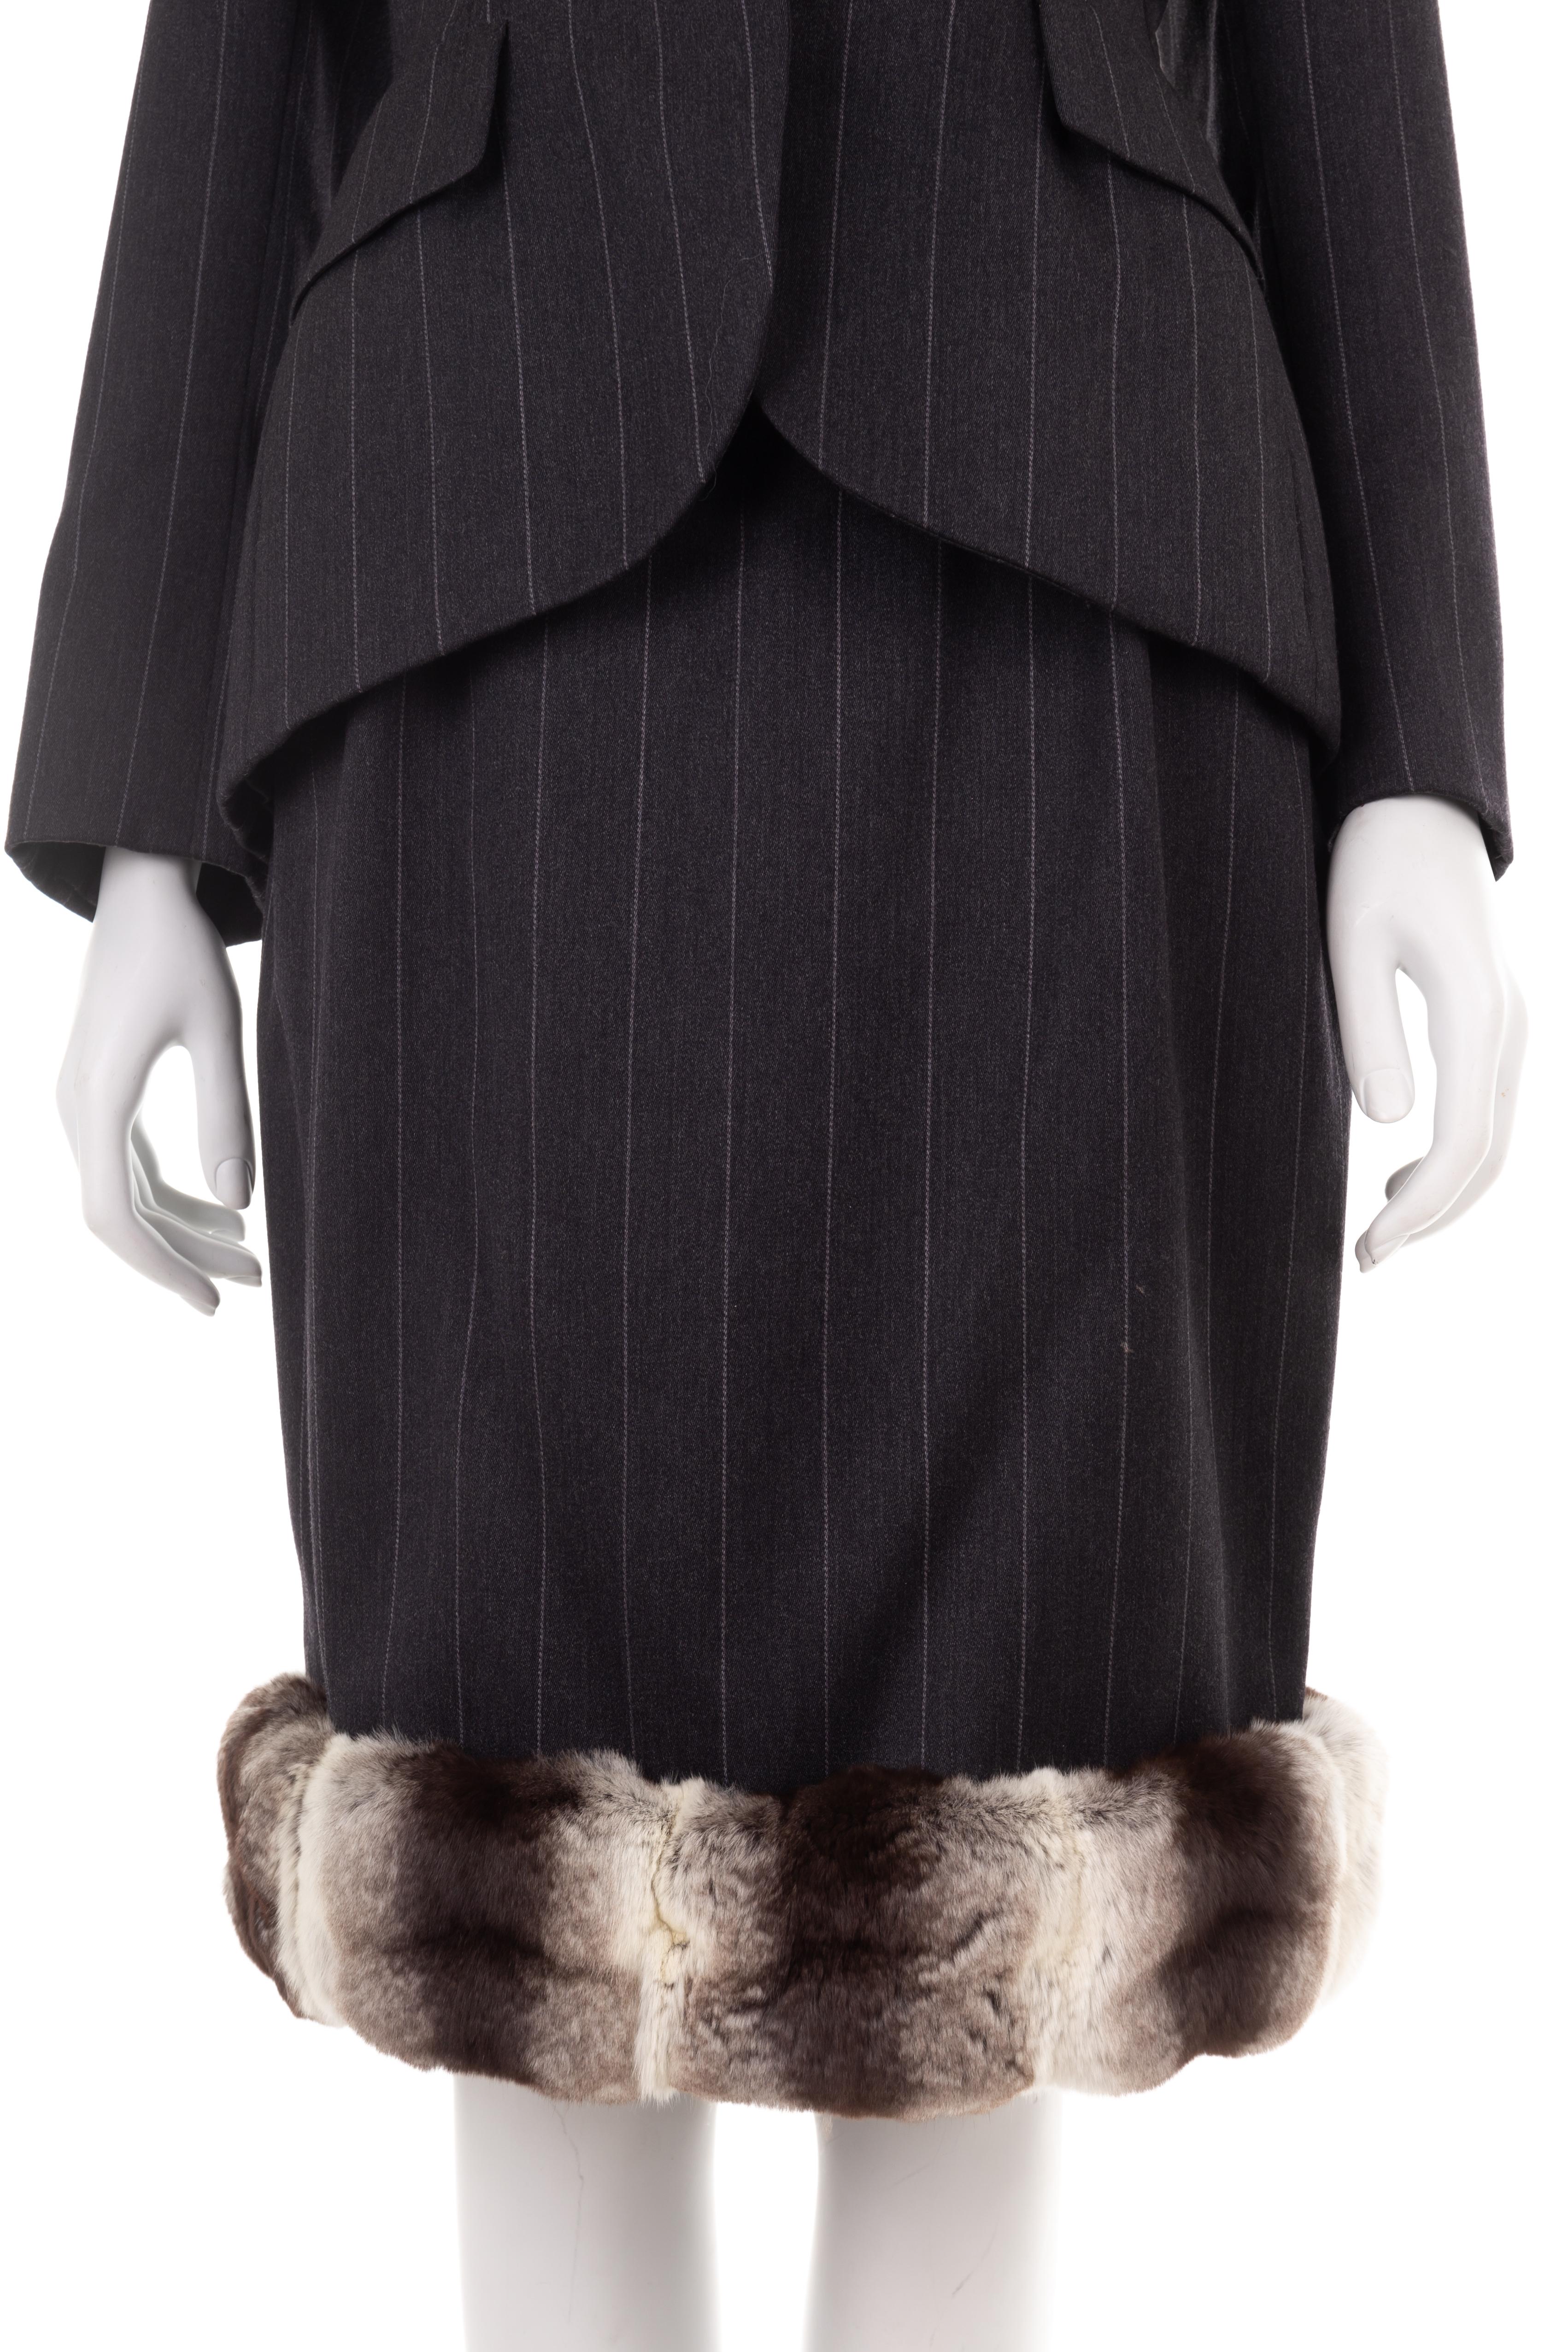 Christian Dior by Marc Bohan F/W 1987 grey pinstripe Chinchilla fur skirt suit For Sale 1